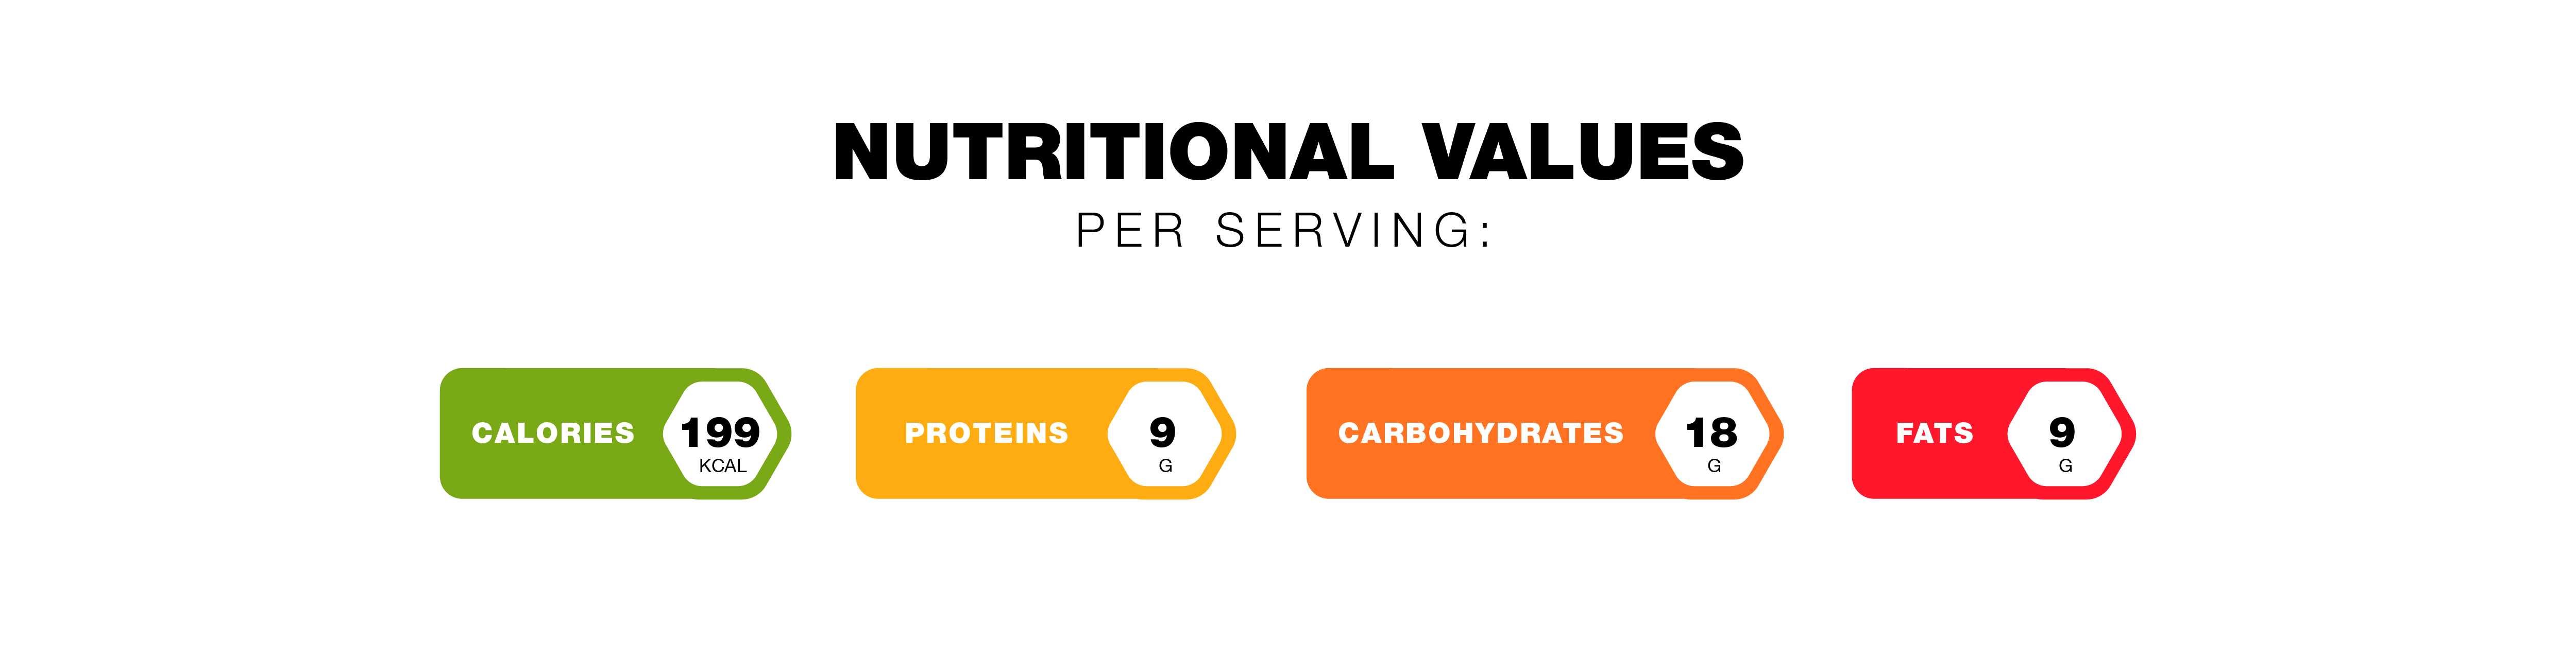 nutritional values of hummus